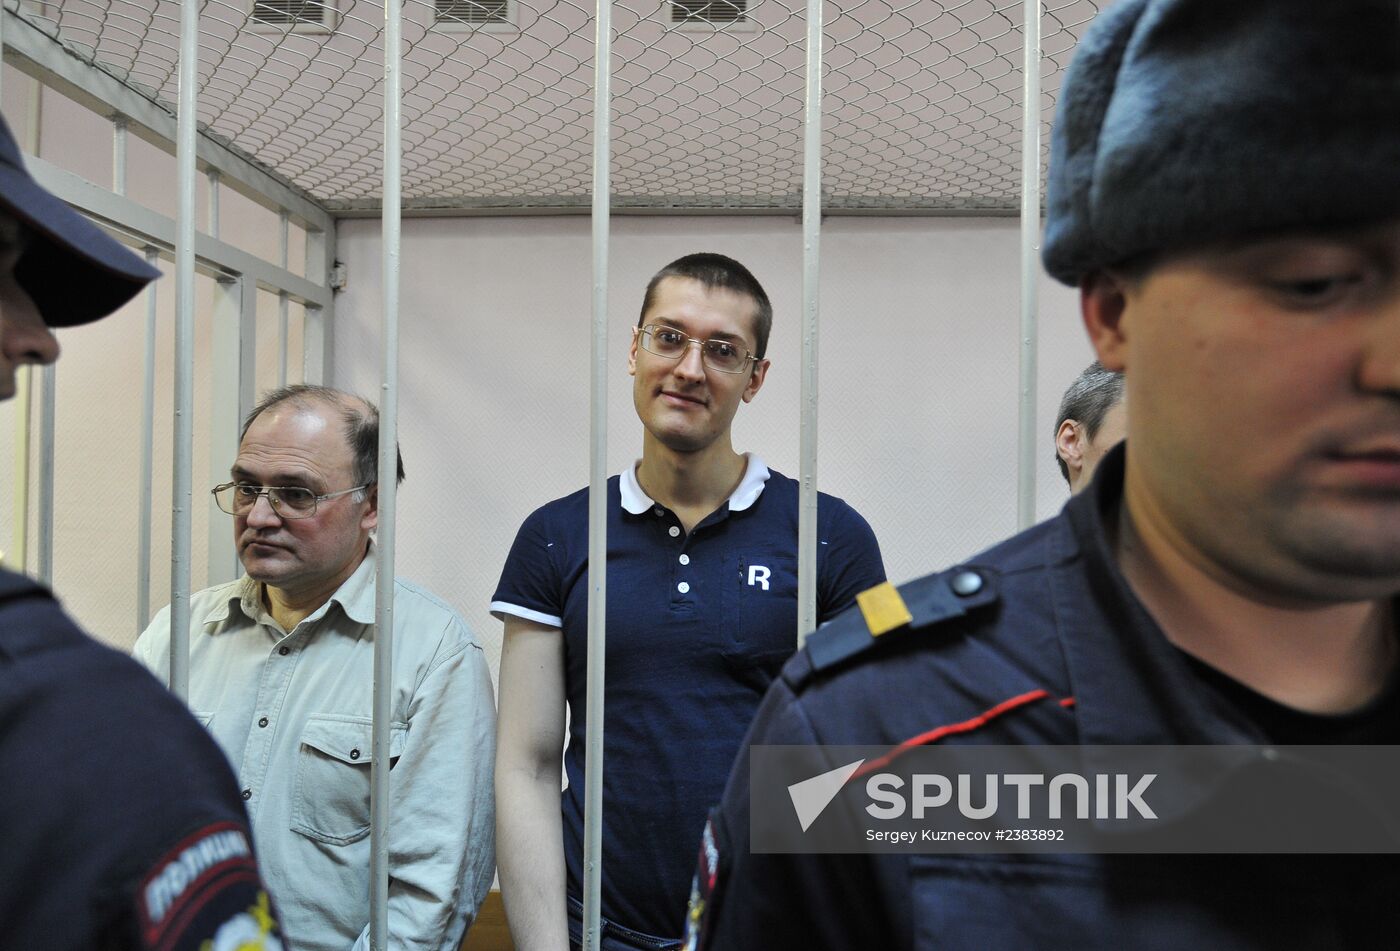 Announcement of verdict in Bolotnaya Square case of May 6, 2012